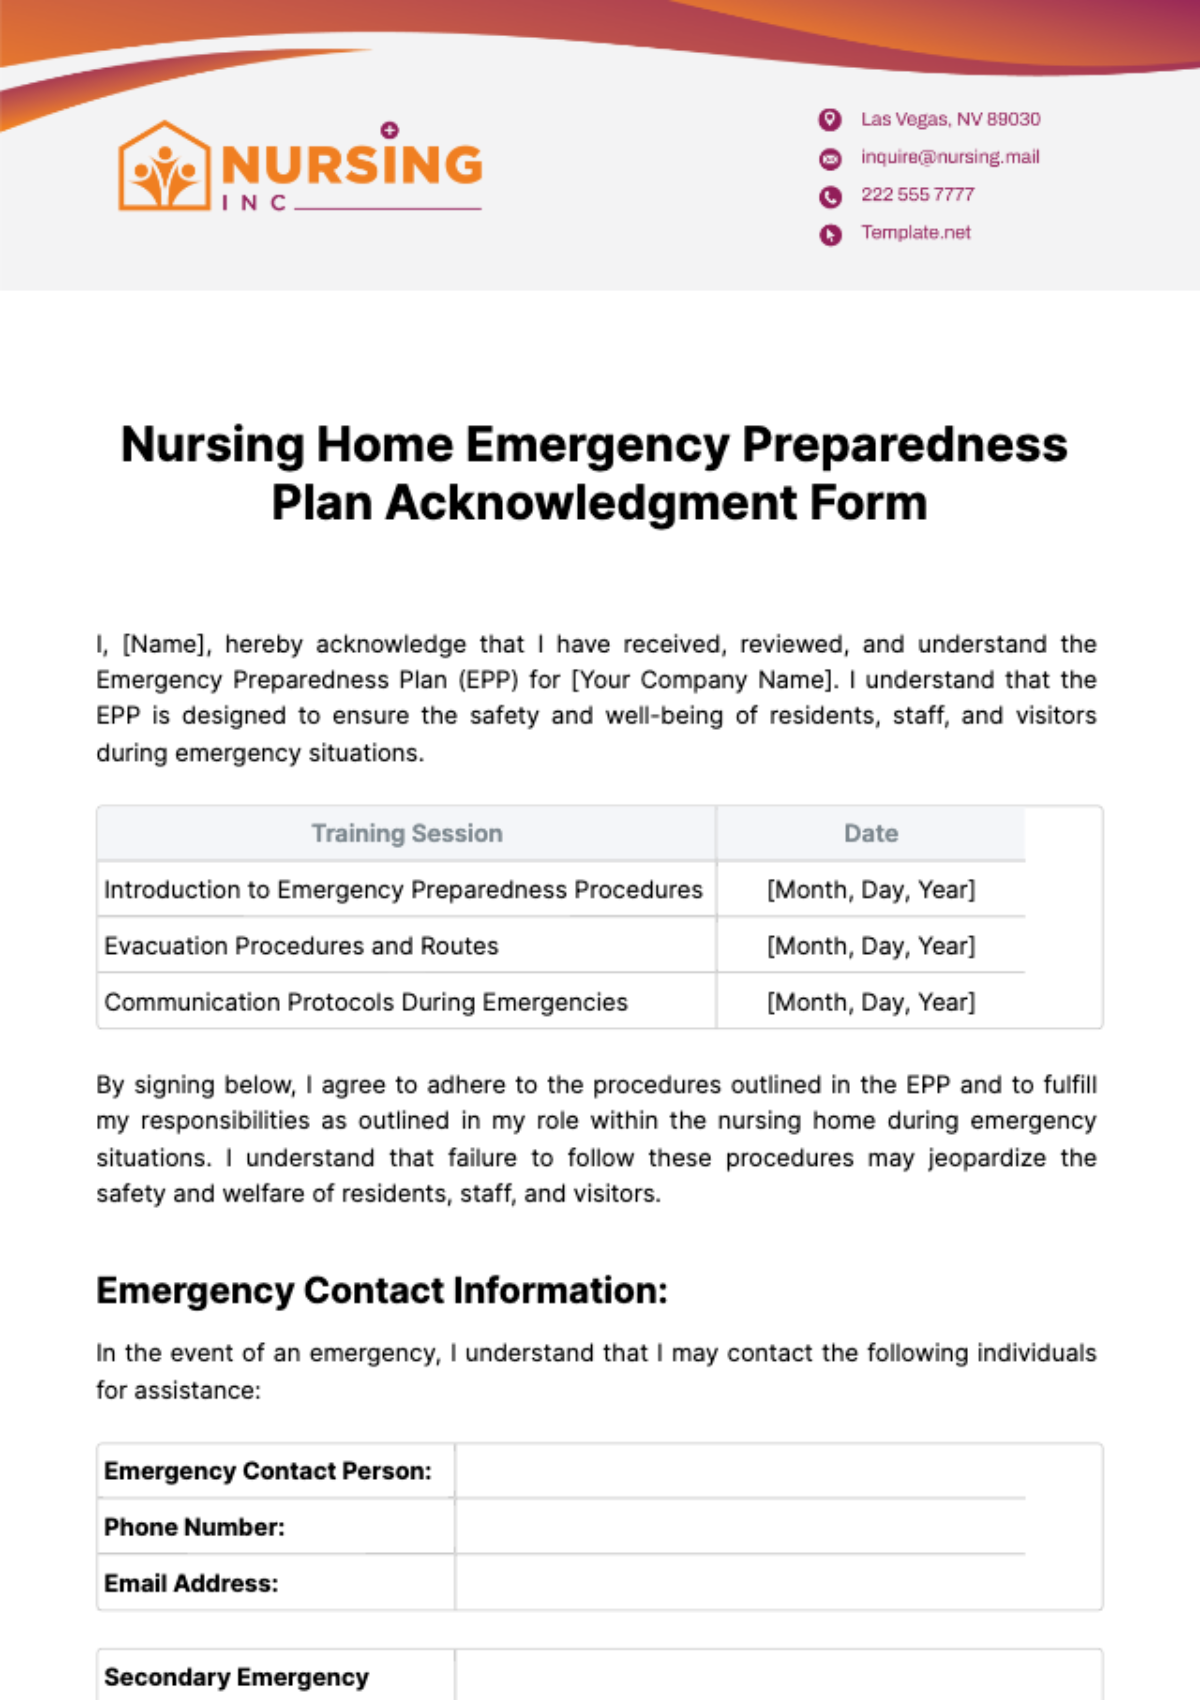 Nursing Home Emergency Preparedness Plan Acknowledgment Form Template